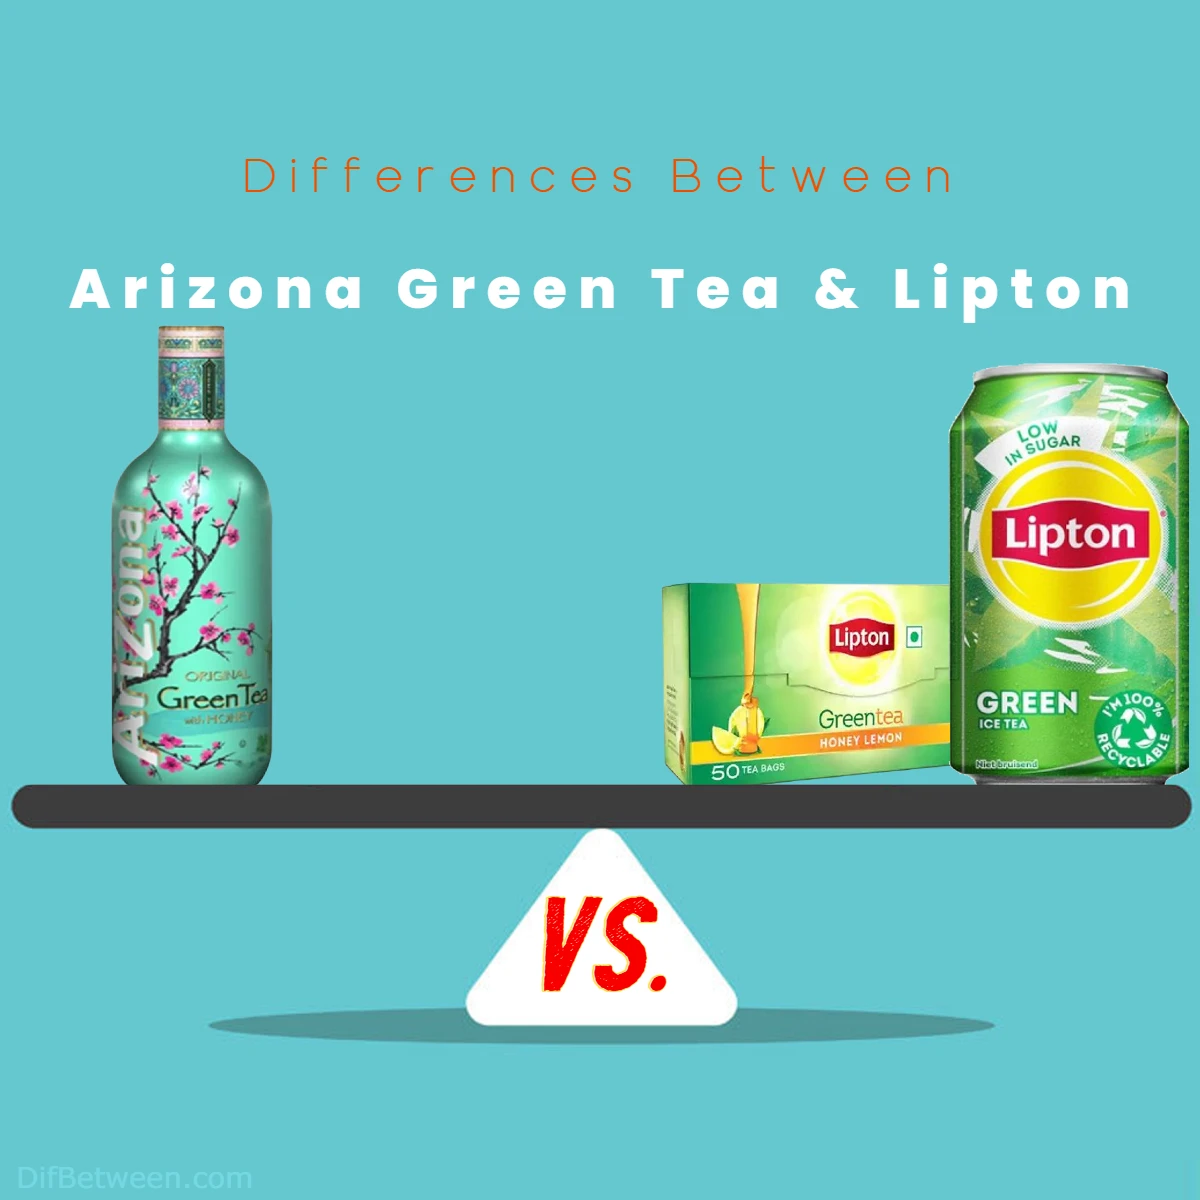 Differences Between Lipton Green Tea and Arizona Green Tea